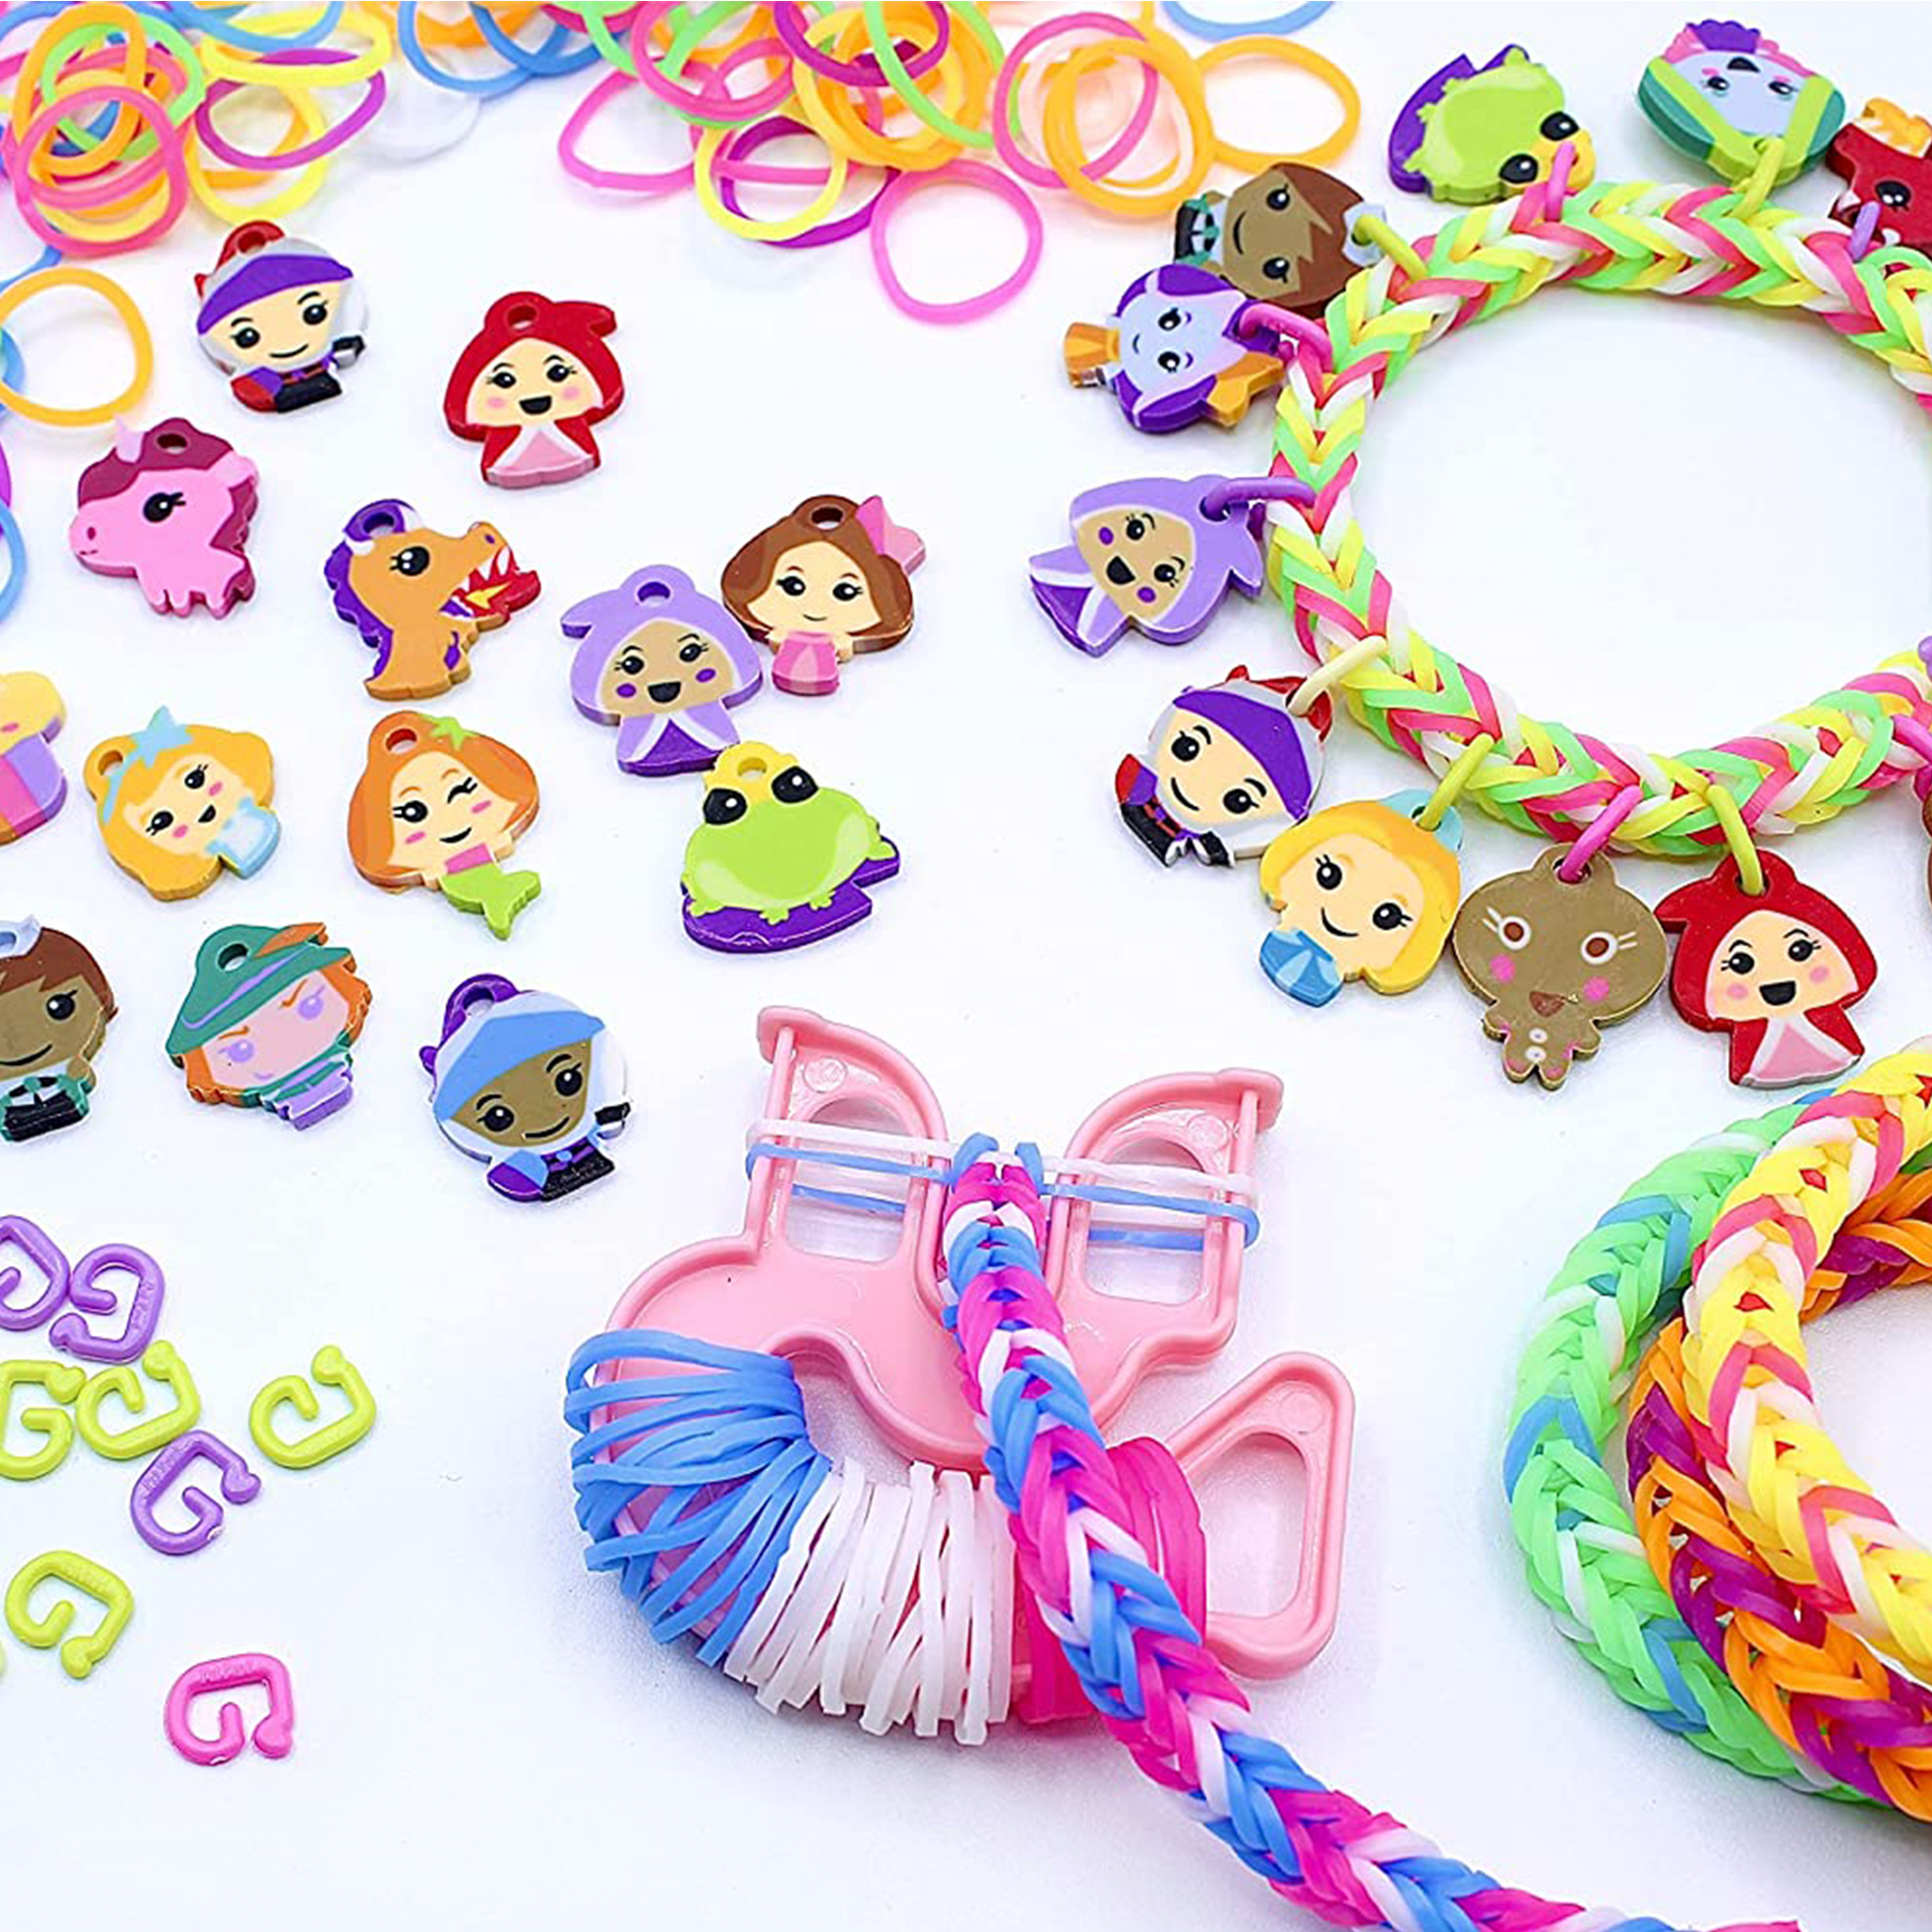 Loomi-Pals® Charm Bracelet Kit - Party – Rainbow Loom USA Webstore